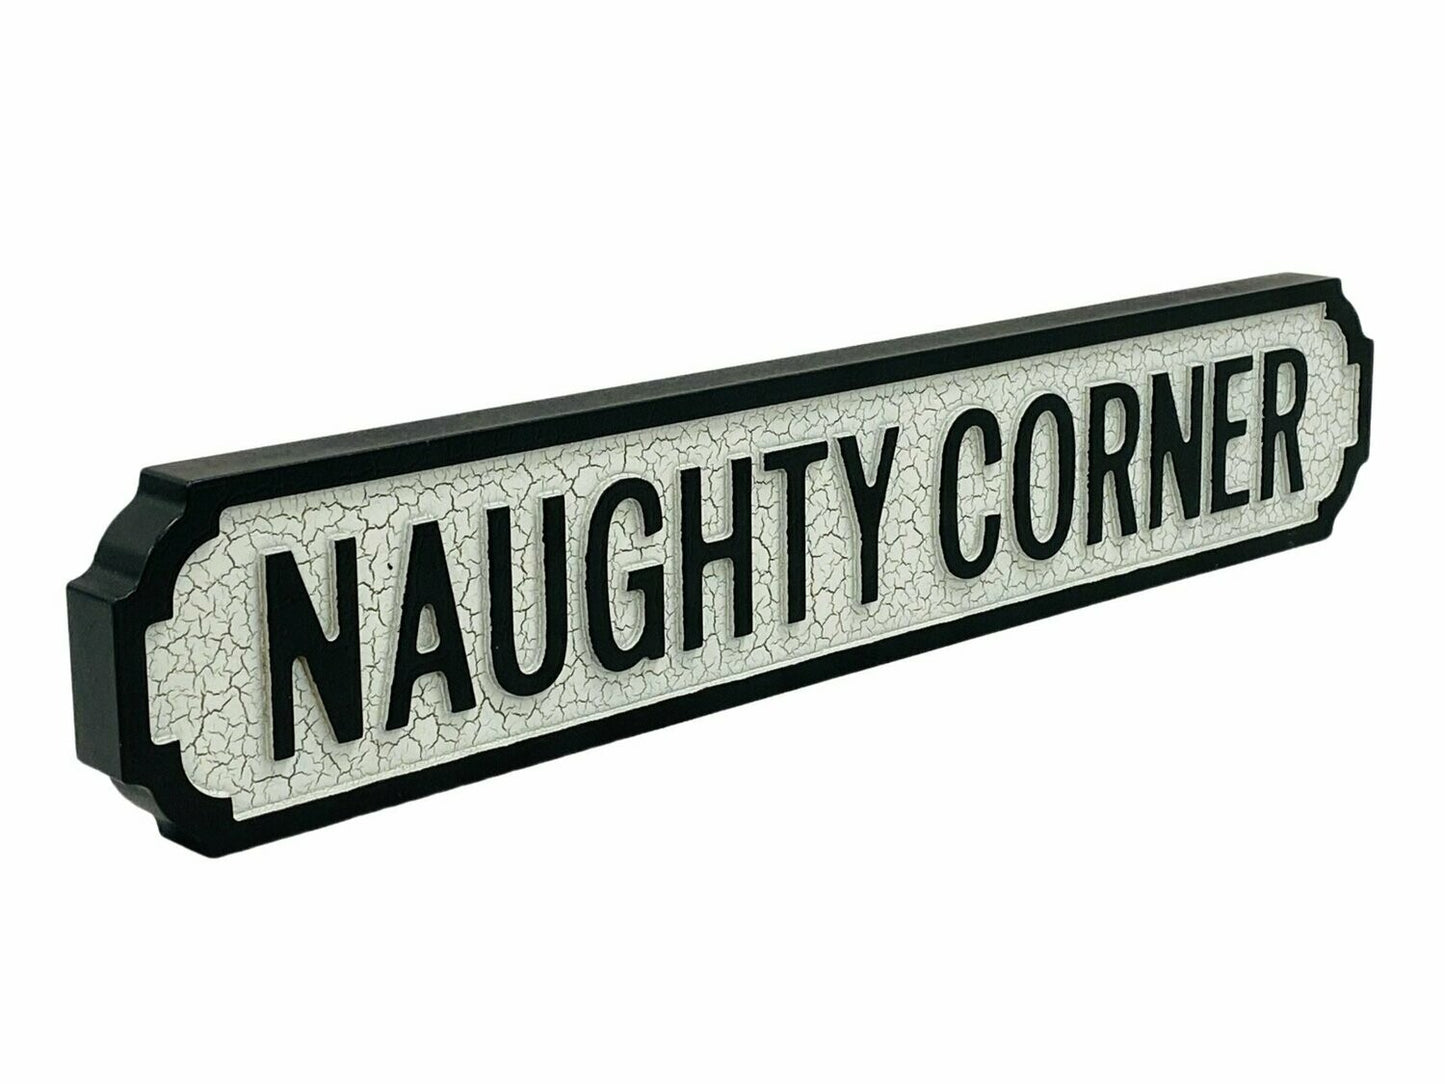 "Naughty Corner" Road Sign